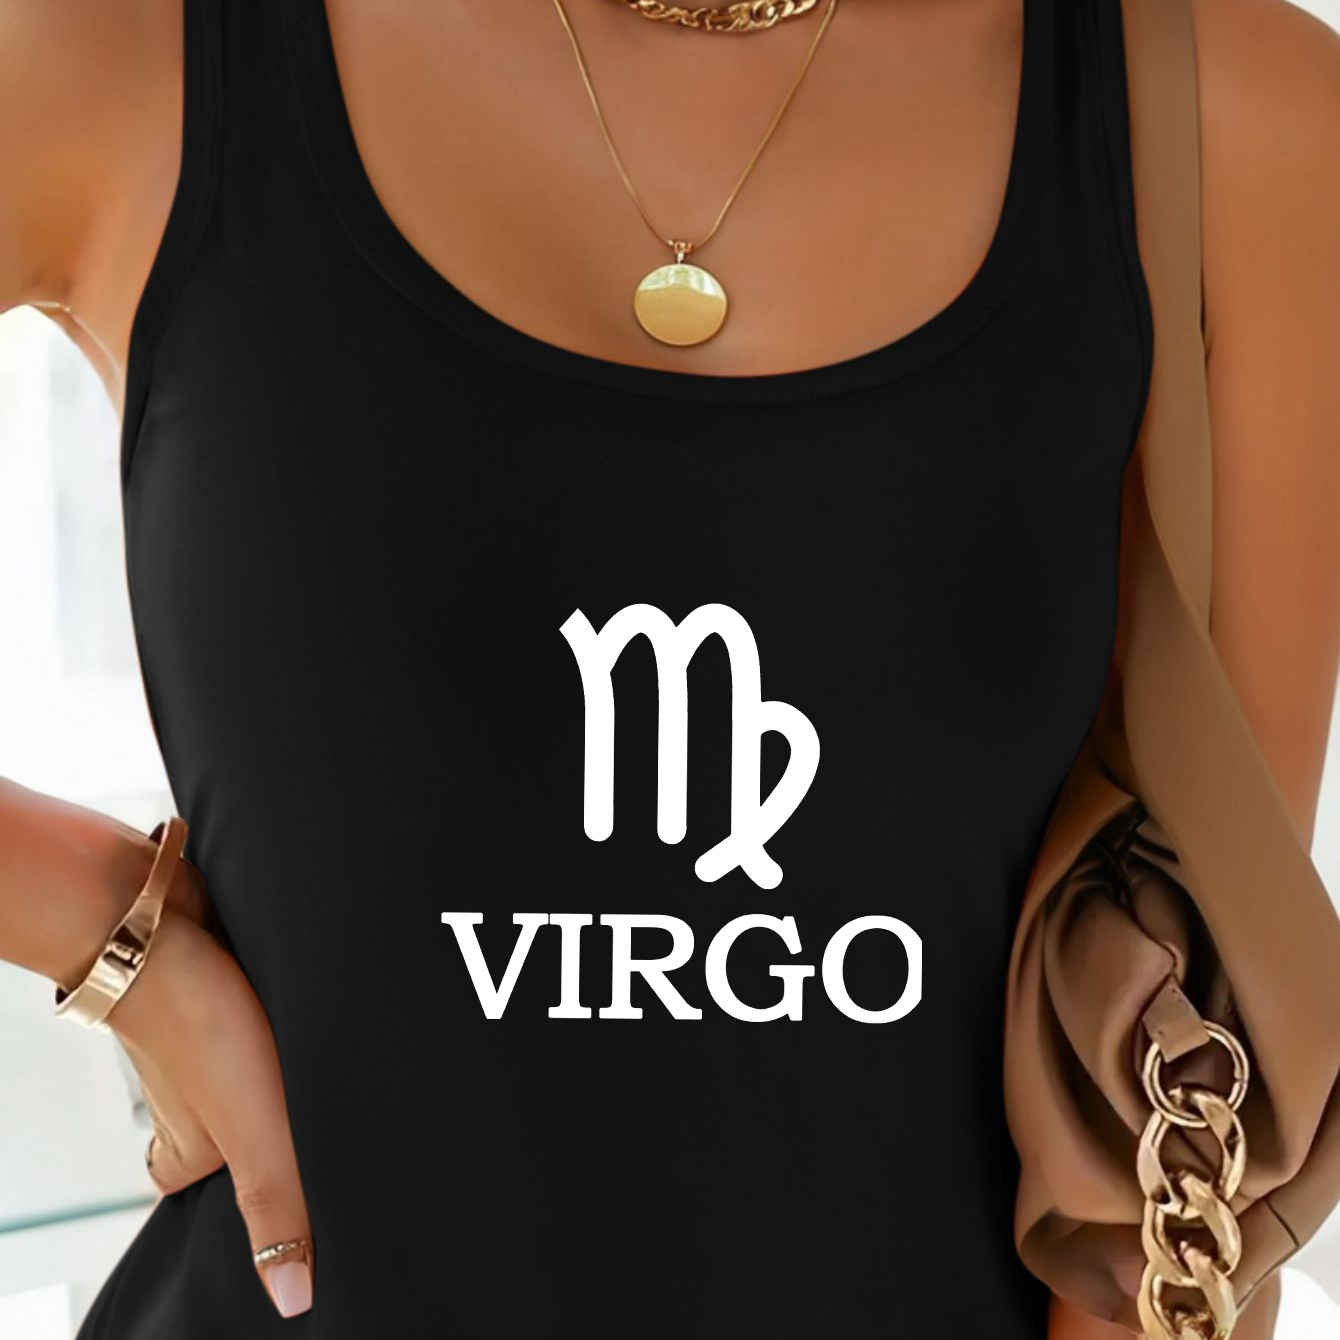 

Virgo Print Crew Neck Tank Top, Sleeveless Casual Top For Summer & Spring, Women's Clothing